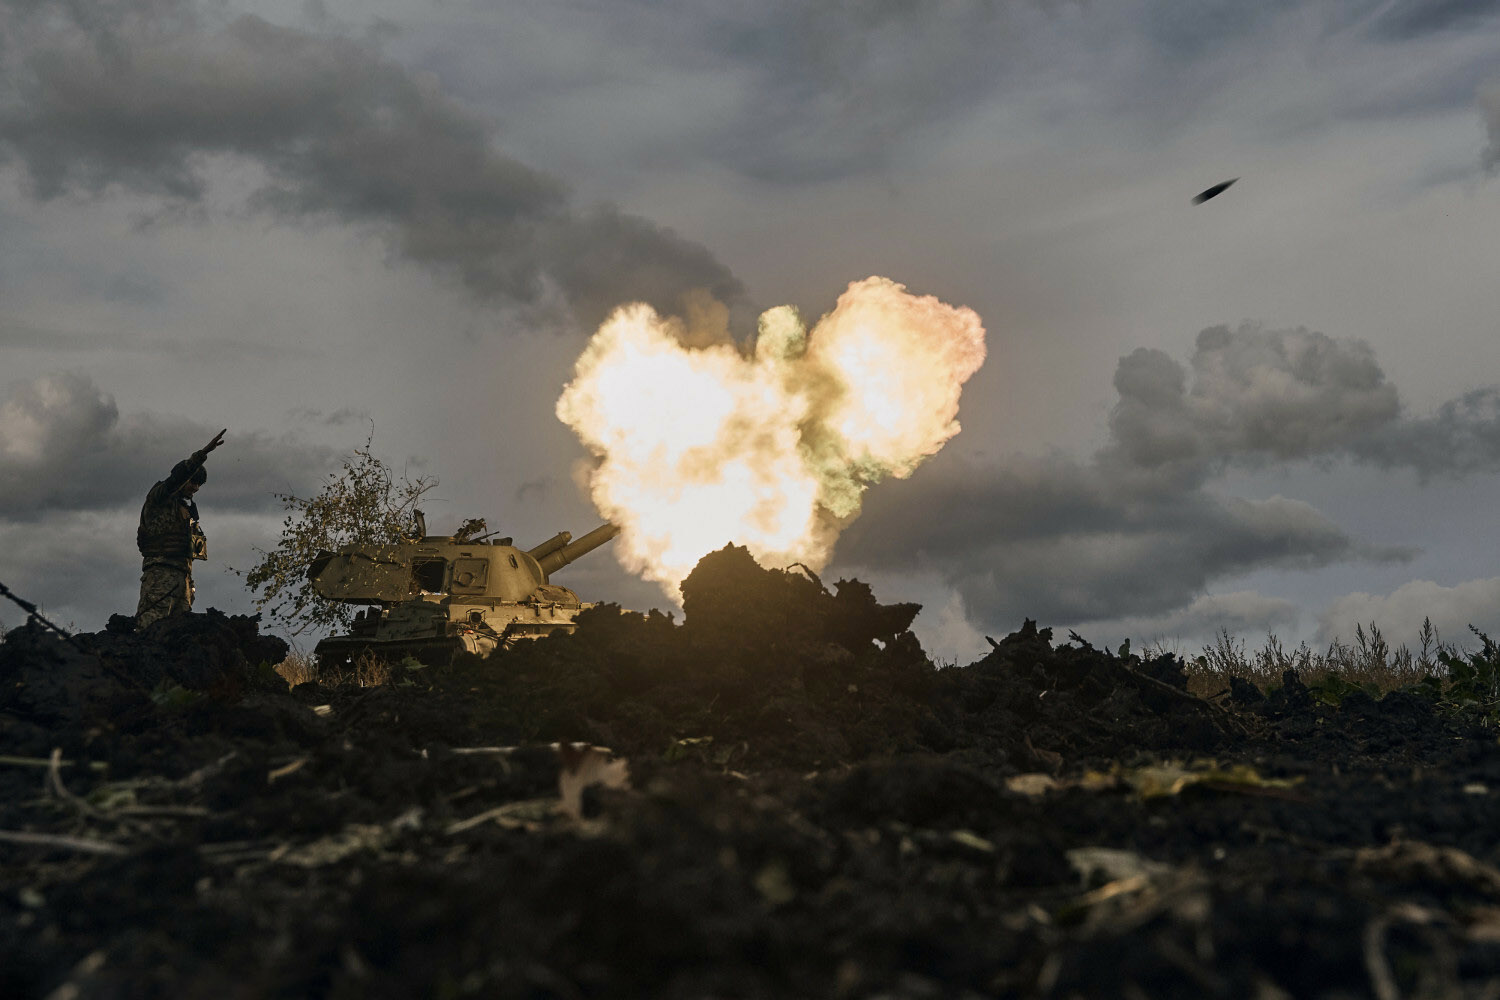 A Ukrainian serviceman reacts as a self-propelled artillery vehicle fires near Bakhmut, Donetsk region, Ukraine, Saturday, Oct. 22, 2022. (AP Photo/LIBKOS)